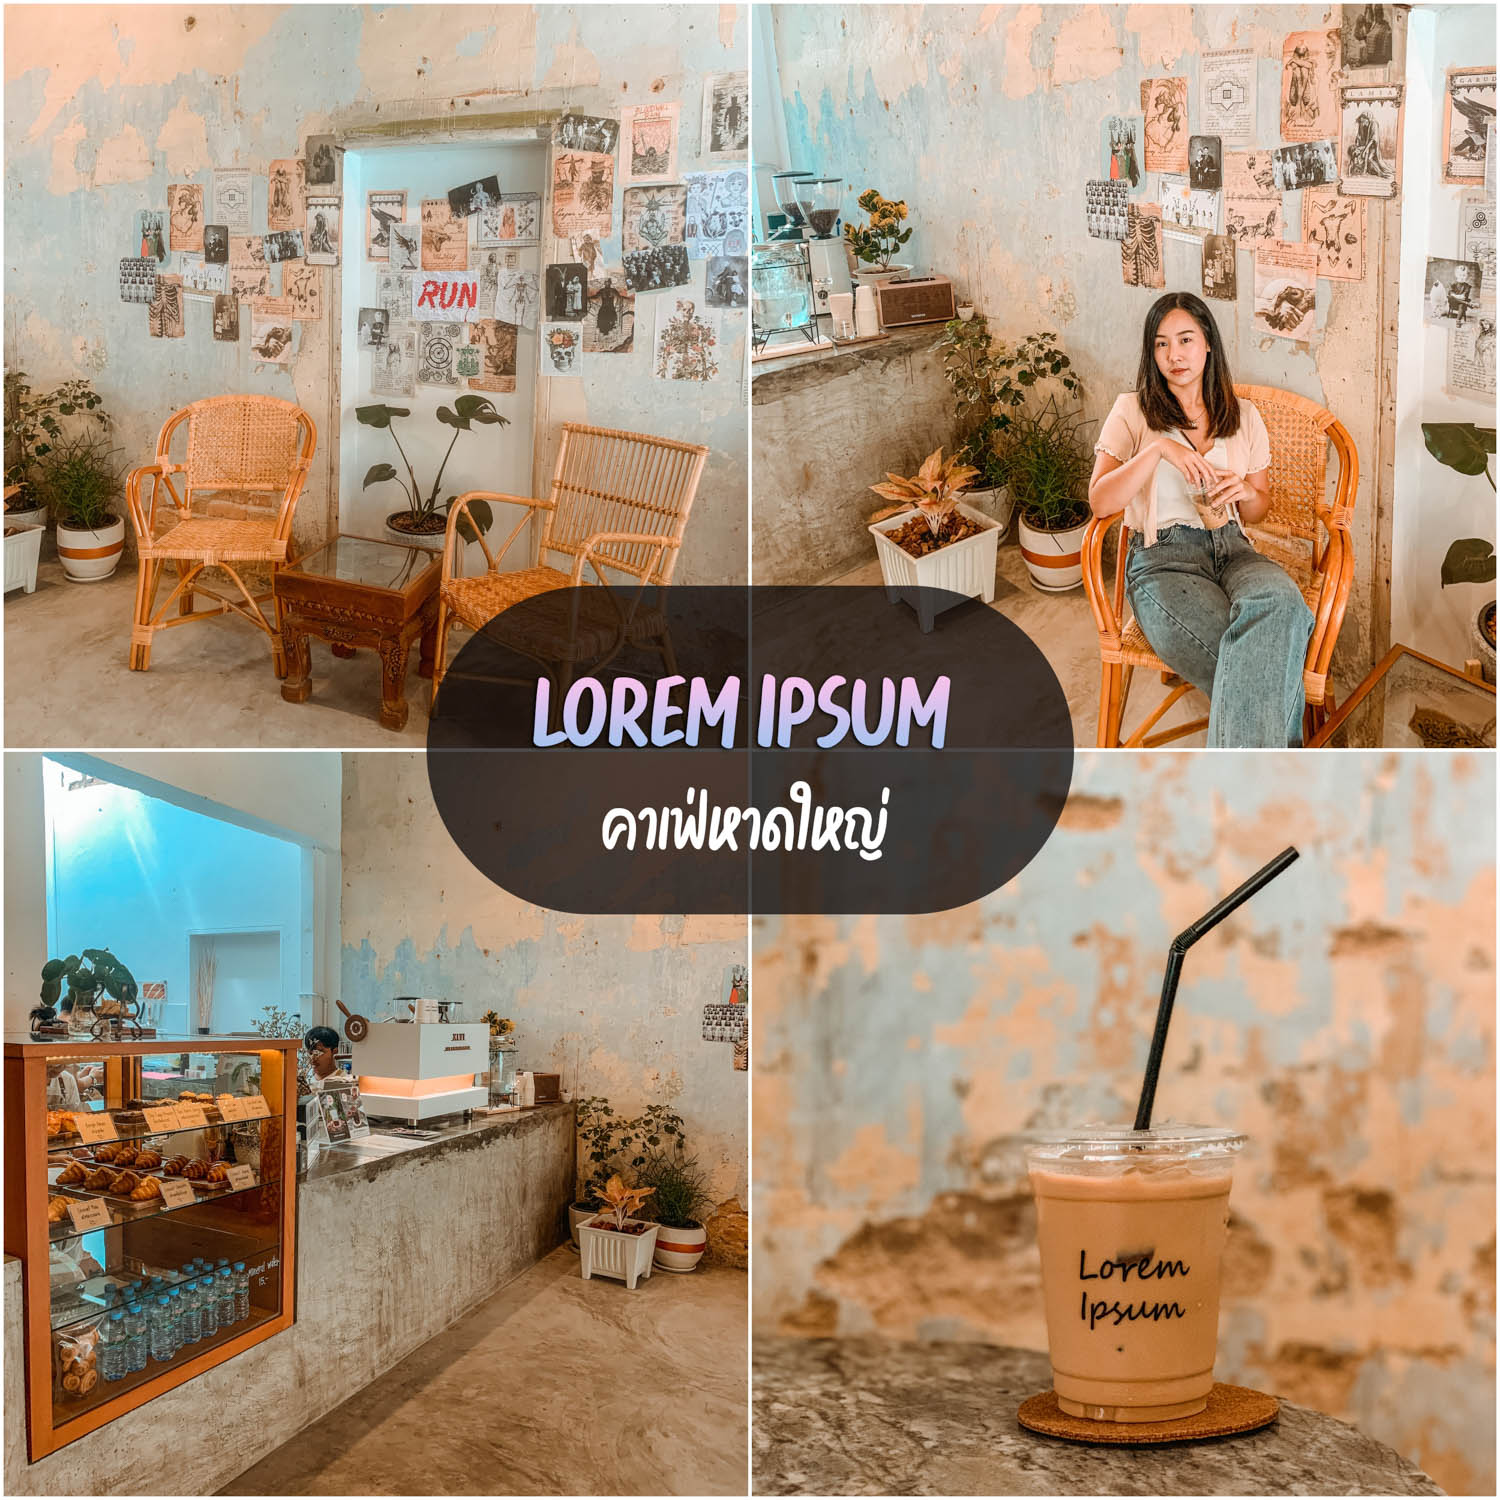 Lorem ipsum คาเฟ่หาดใหญ่ จิบกาแฟฟังเพลงชิวๆ มีจัดงานแสดงนิทรรศการผลงาน Art เรื่อยๆ